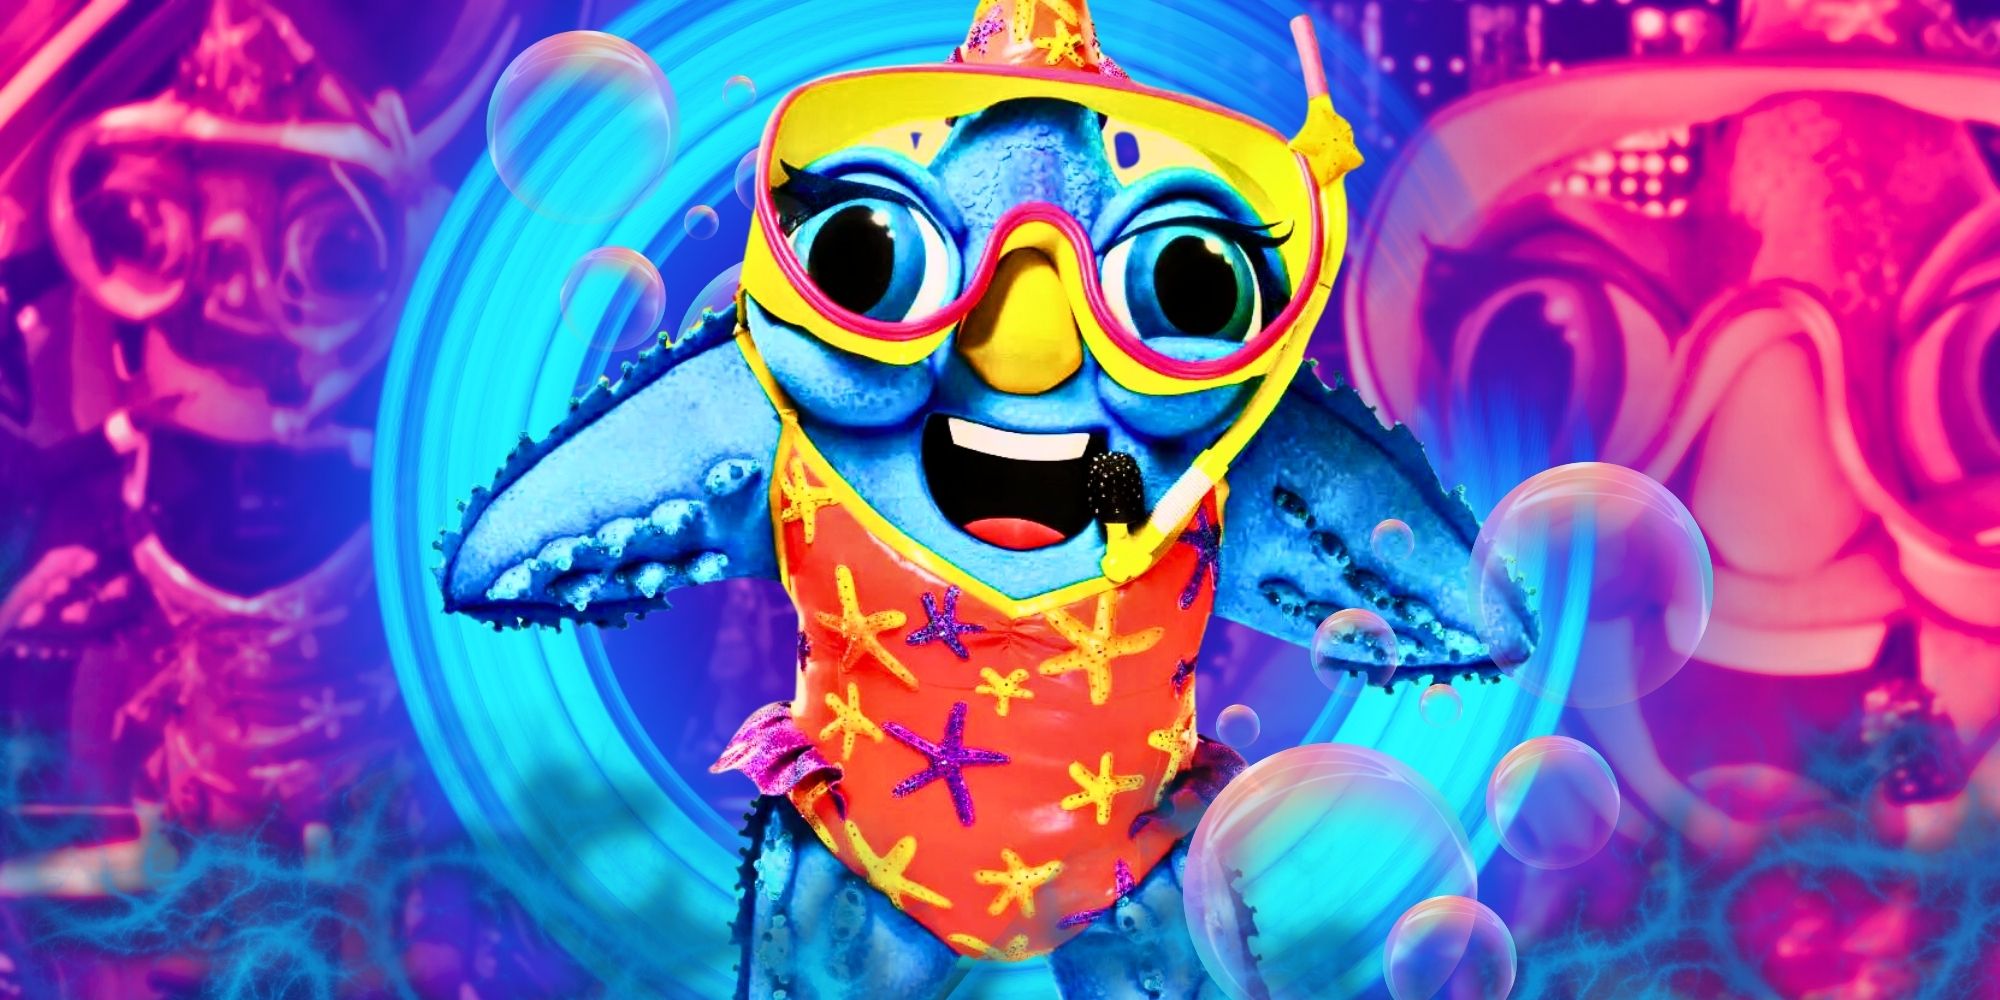  The Masked Singer Starfish costume